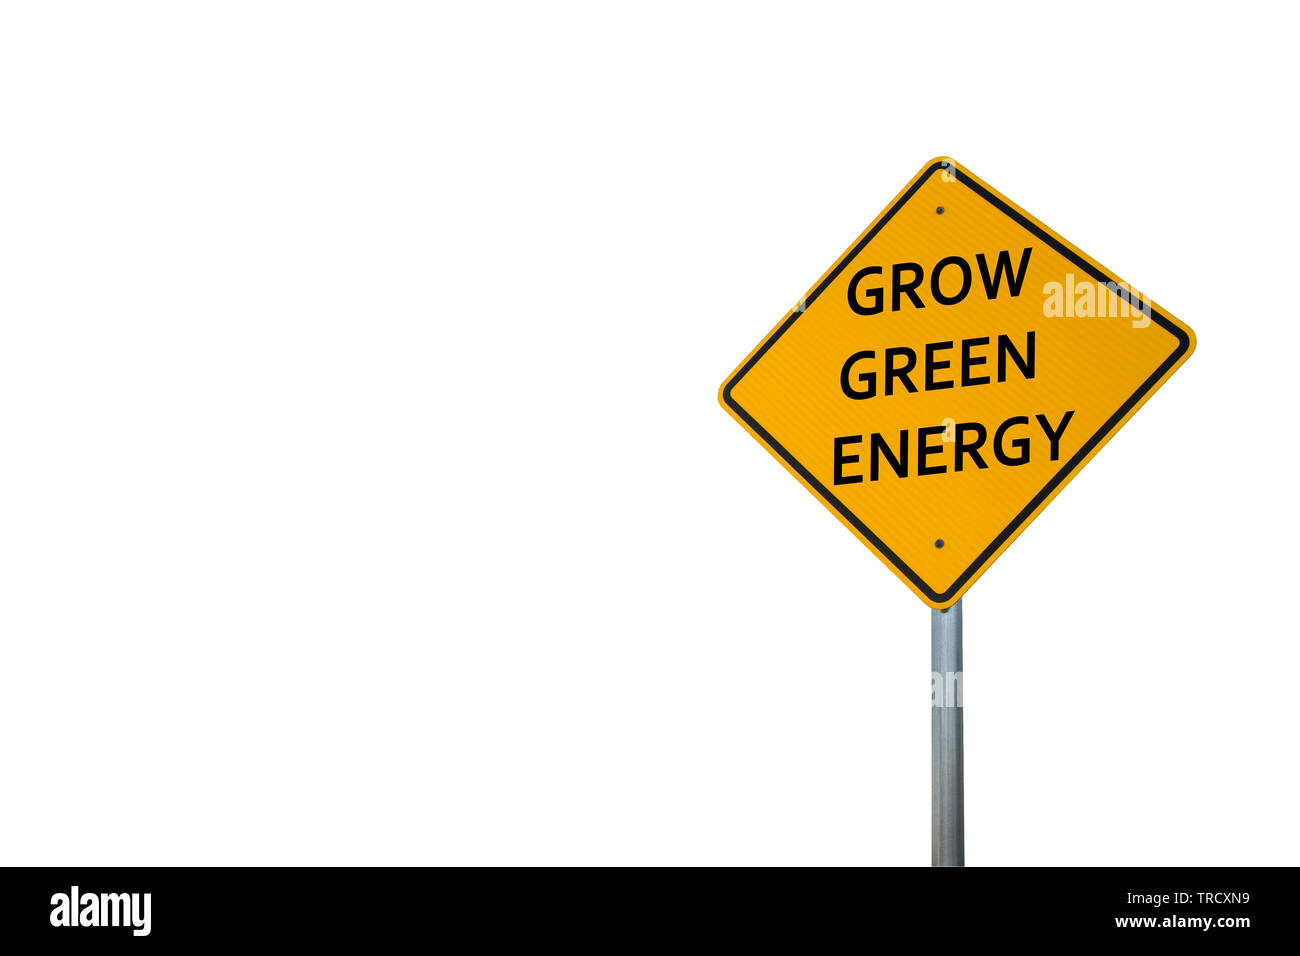 Grow Green Energy Stock Photo